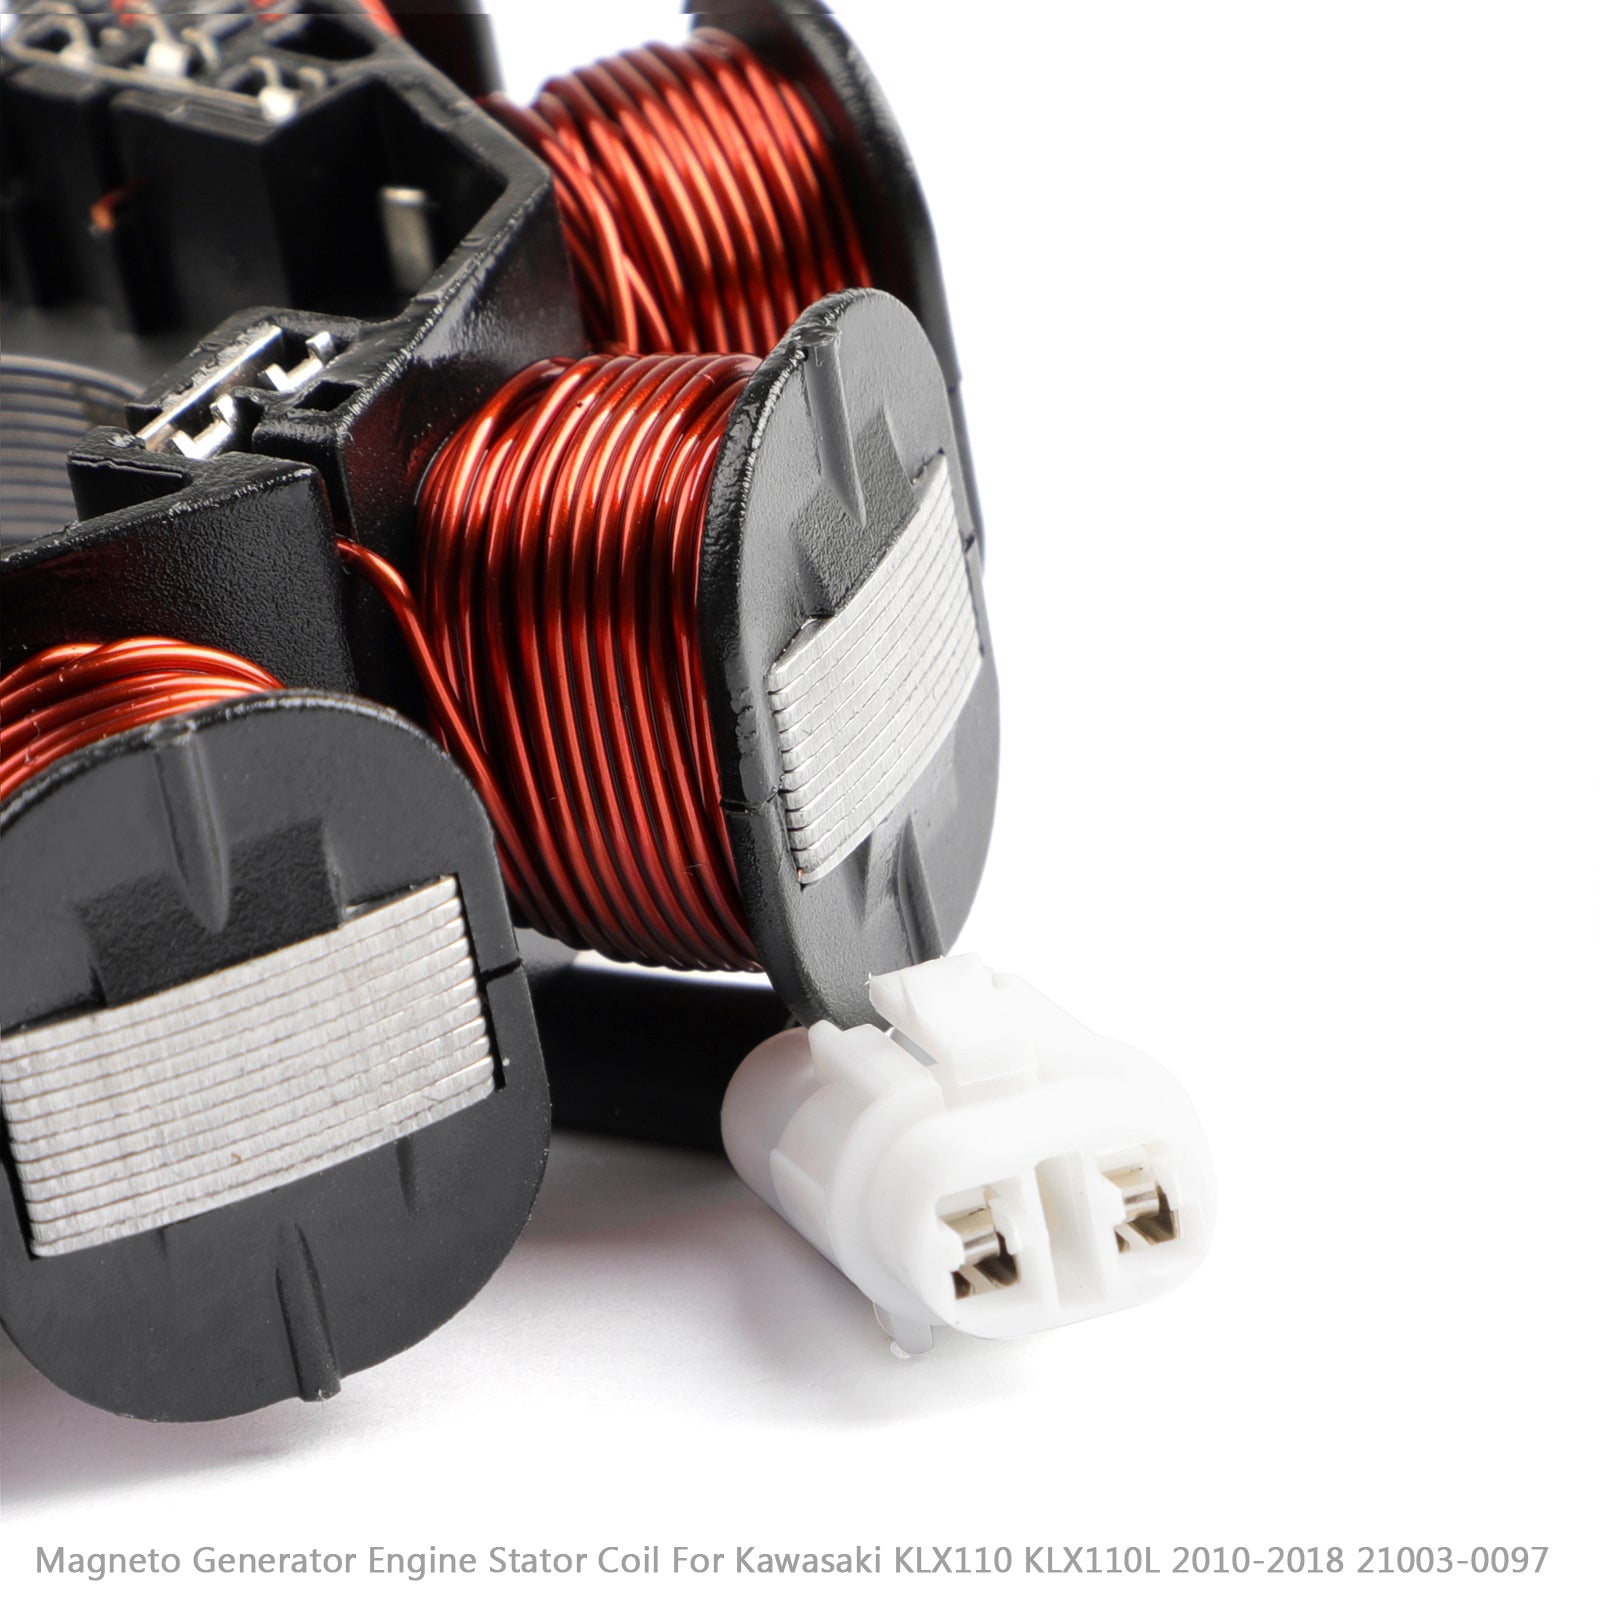 Bobina statore generatore magnete per Kawasaki KLX110 KLX110L 2010-2018 21003-0097 tramite fedex